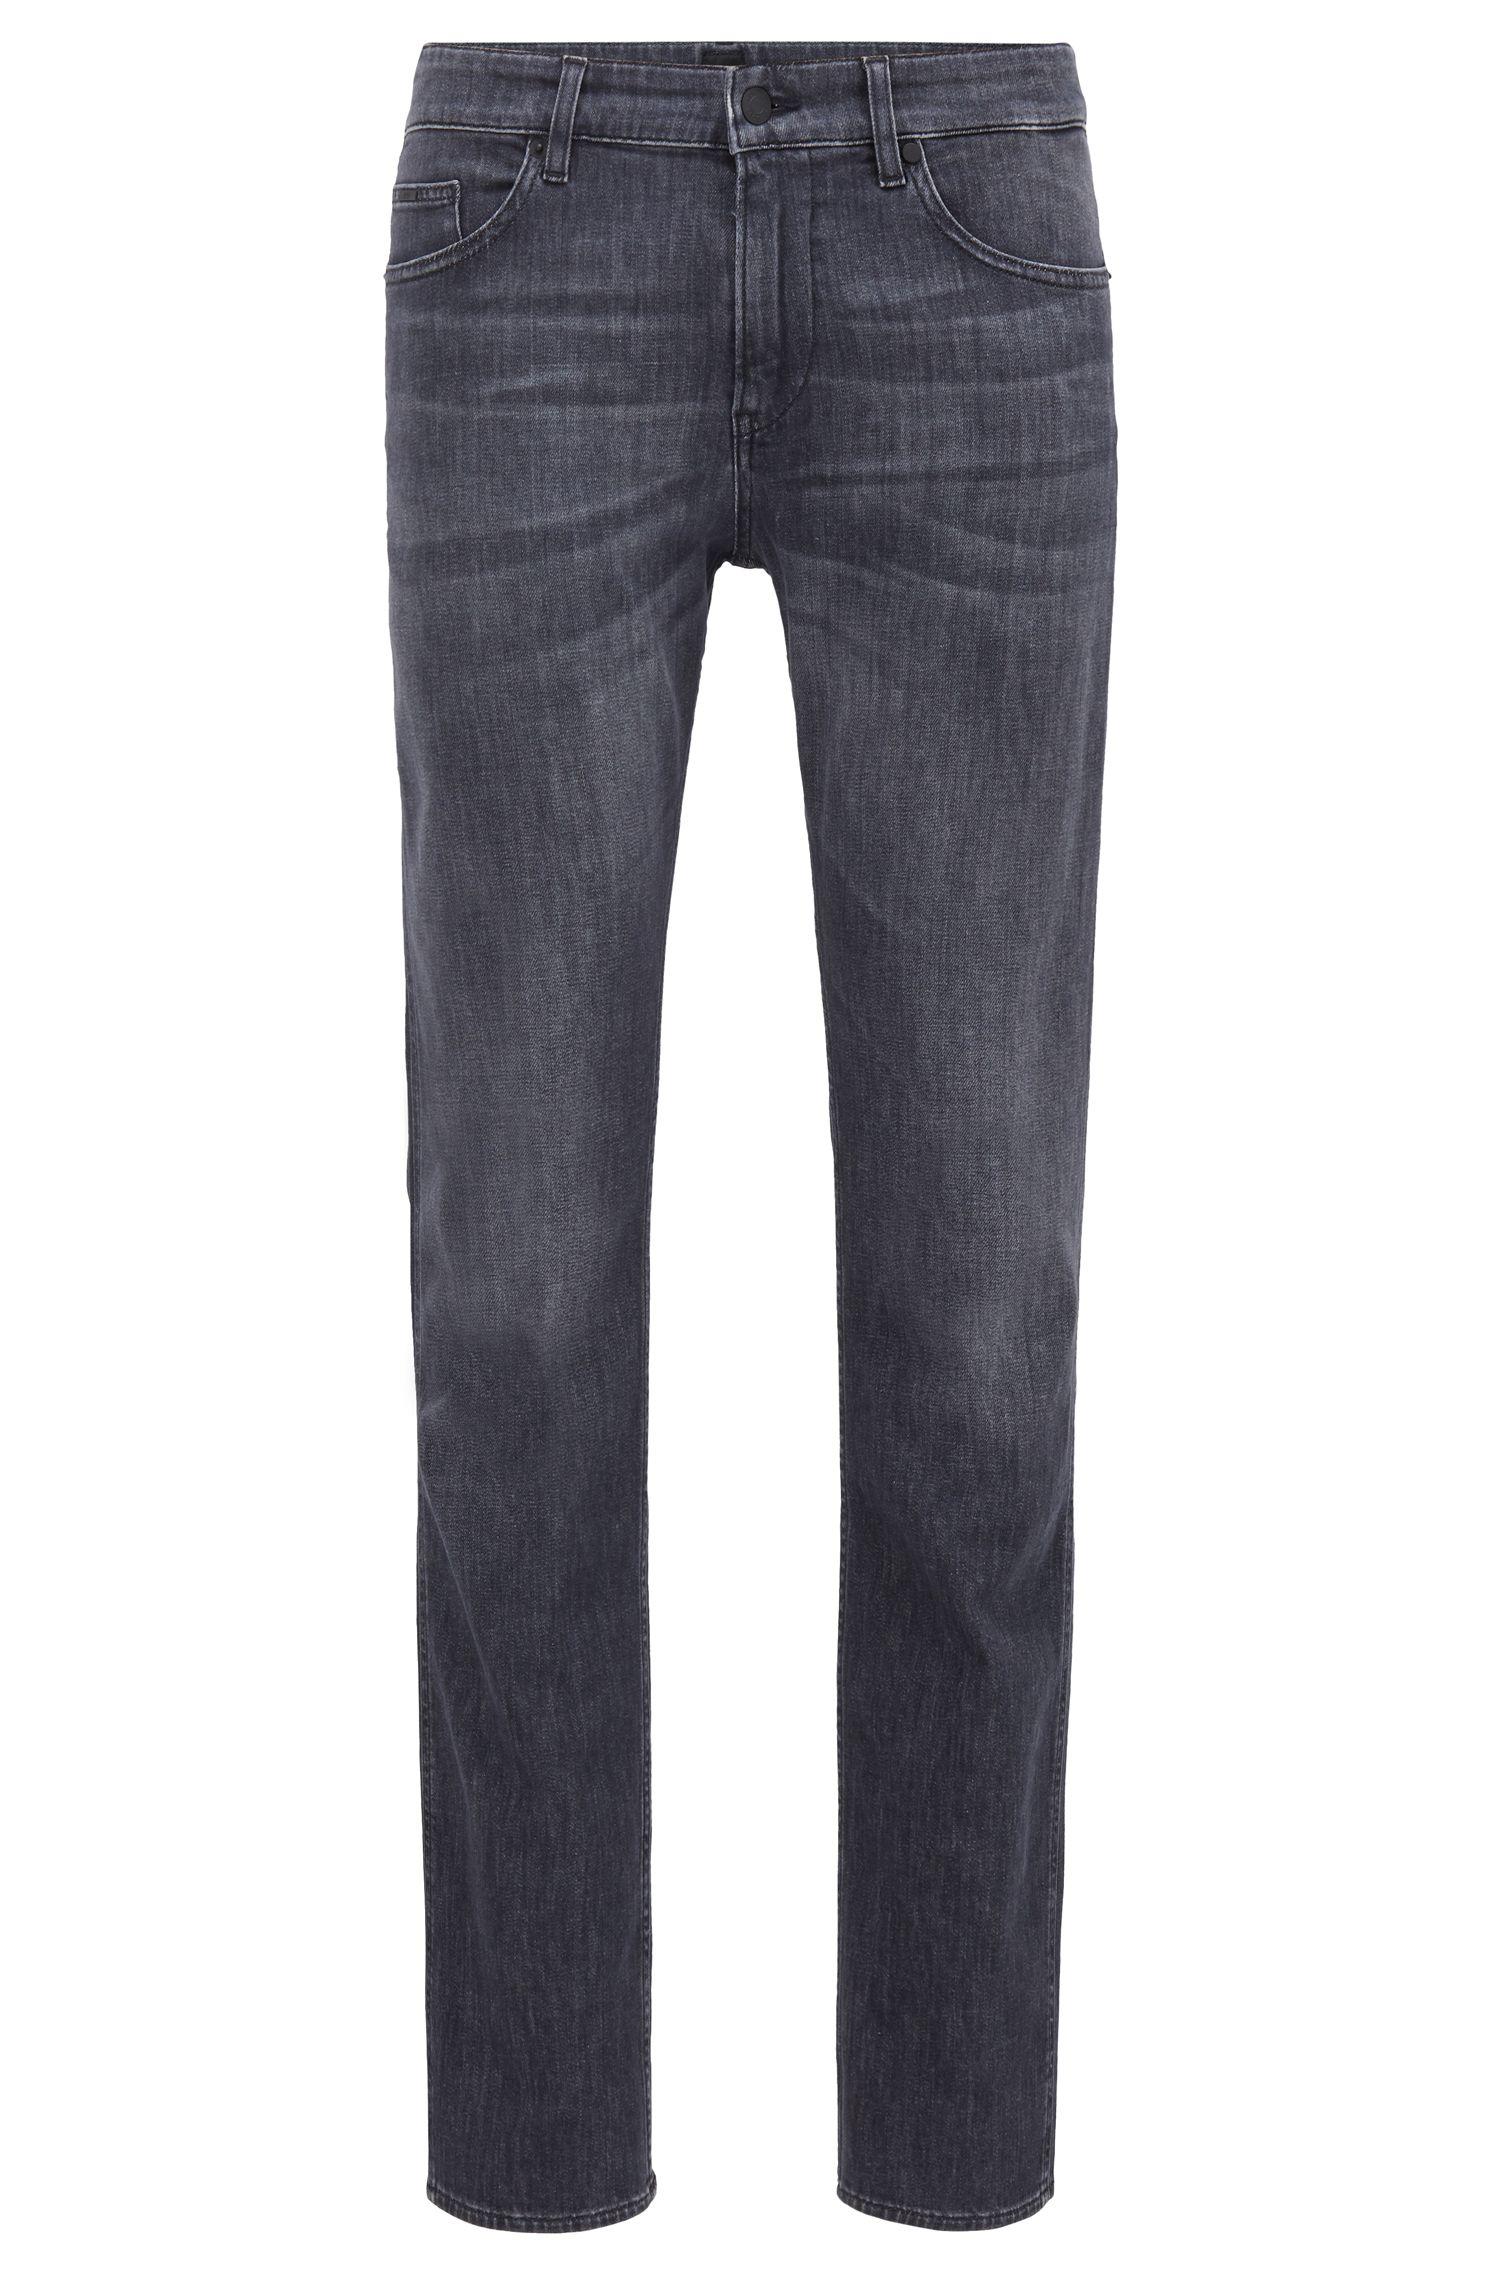 BOSS by Hugo Boss Slim Fit Jeans In Lightweight Gray Comfort Stretch ...